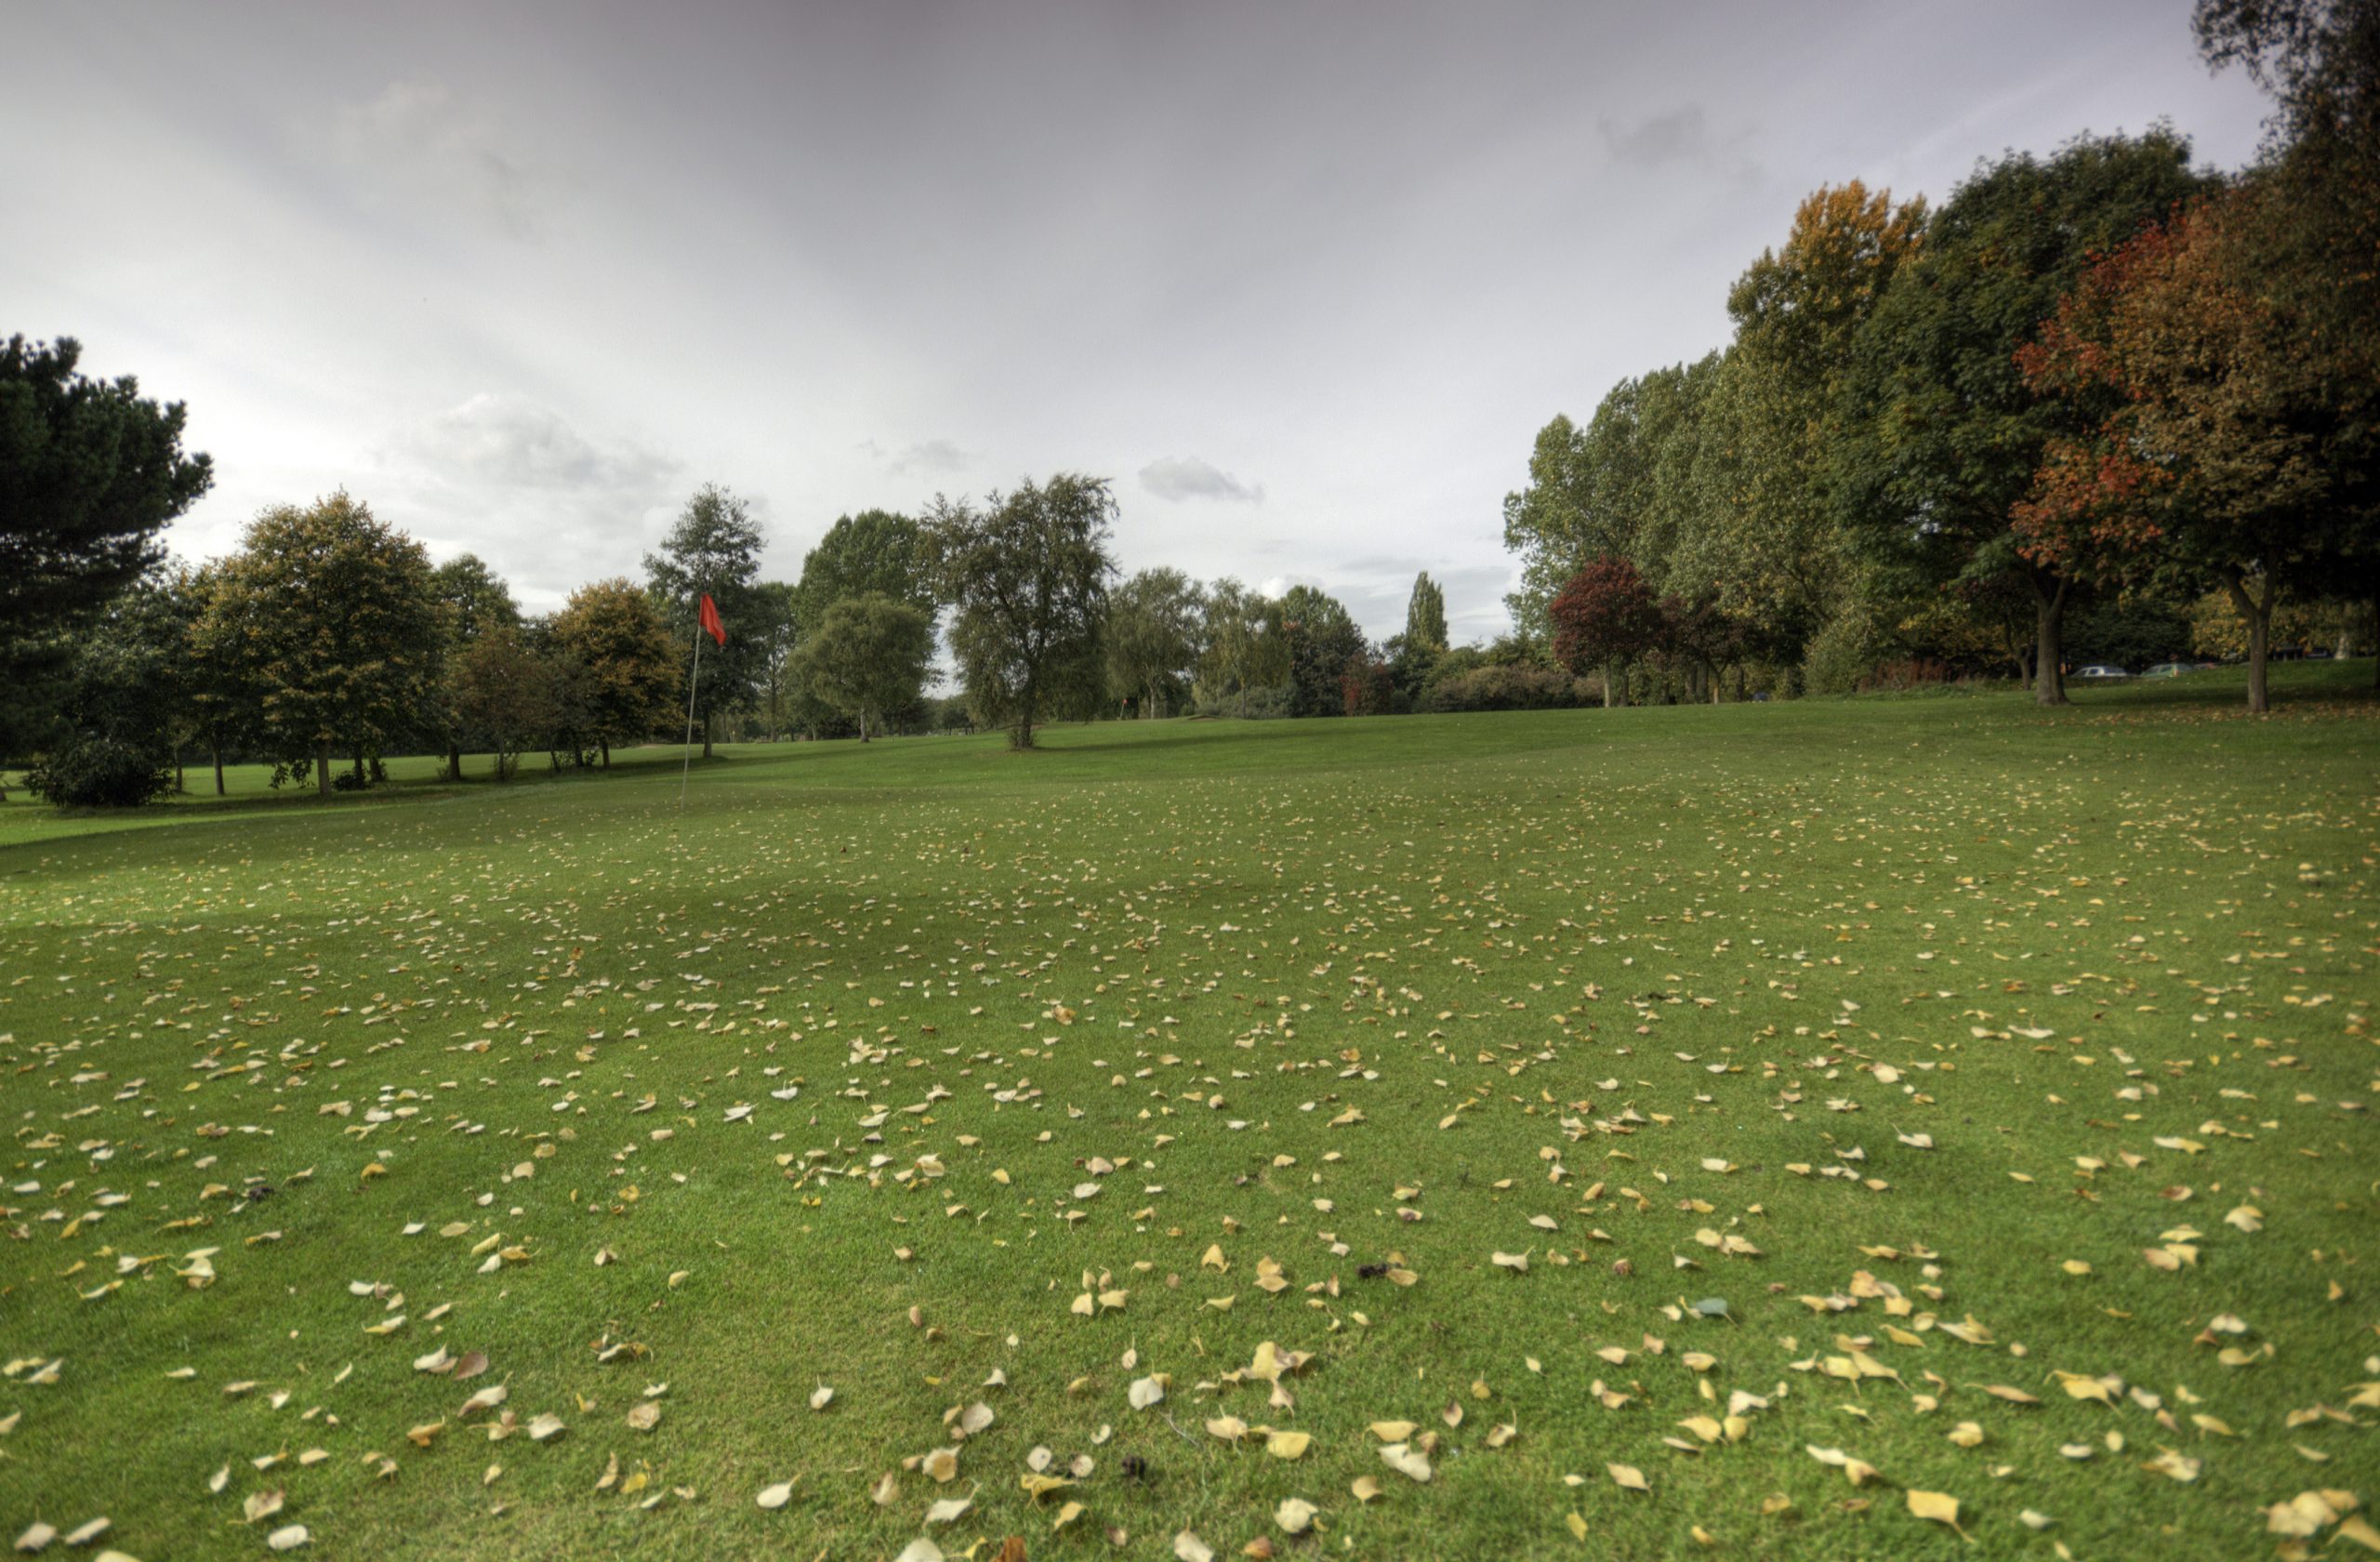 Binder Park Golf Course